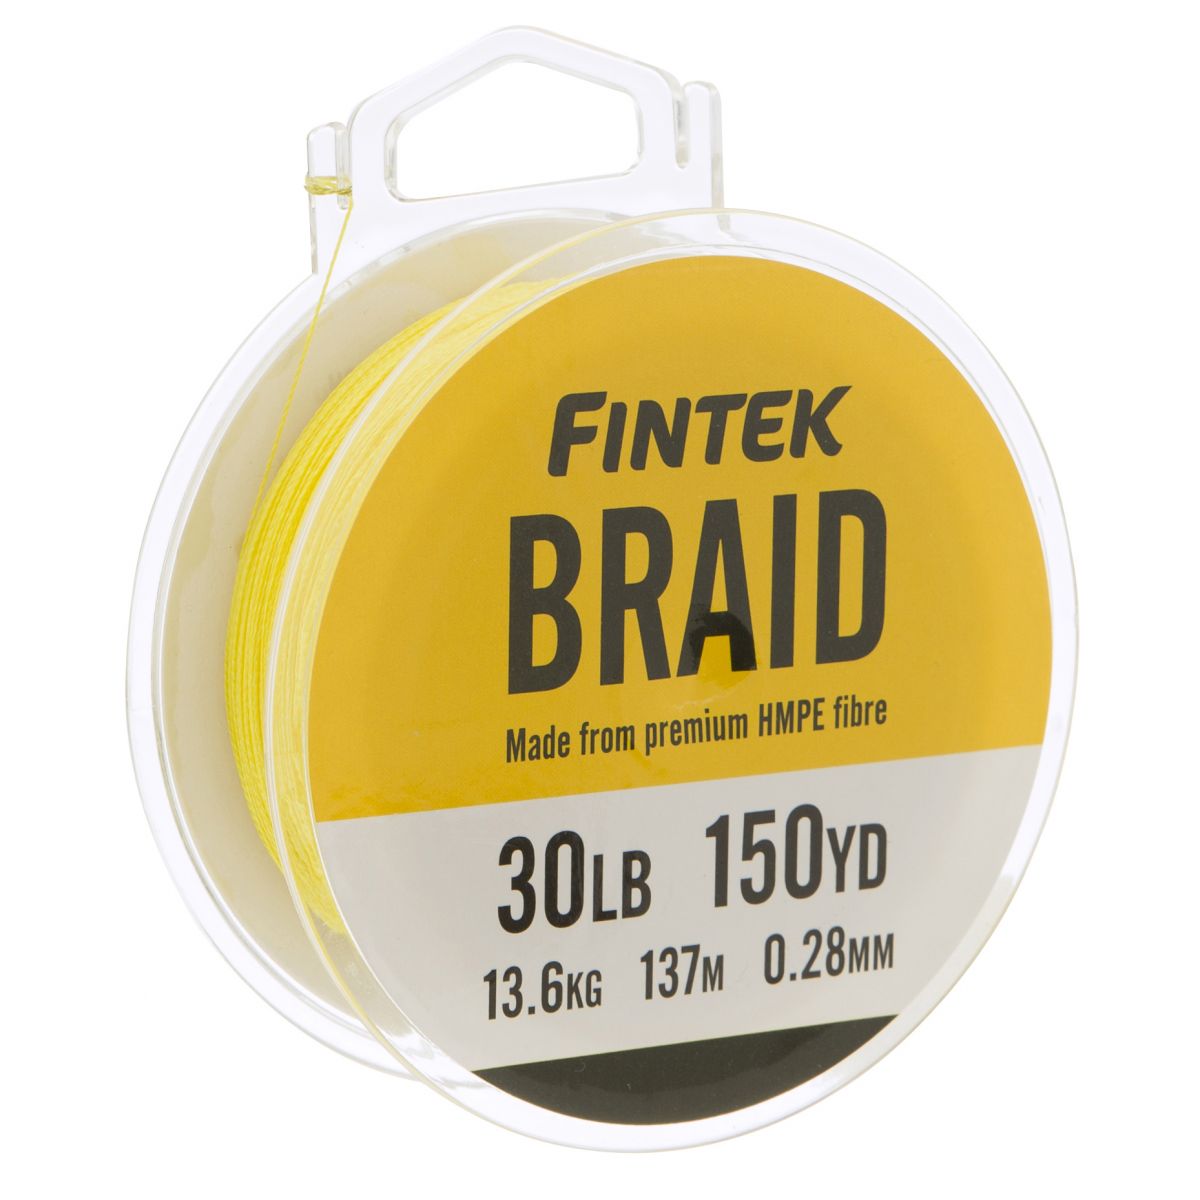 Fintek Braided Fishing Line Yellow 150yd 30lb - Mega Clearance